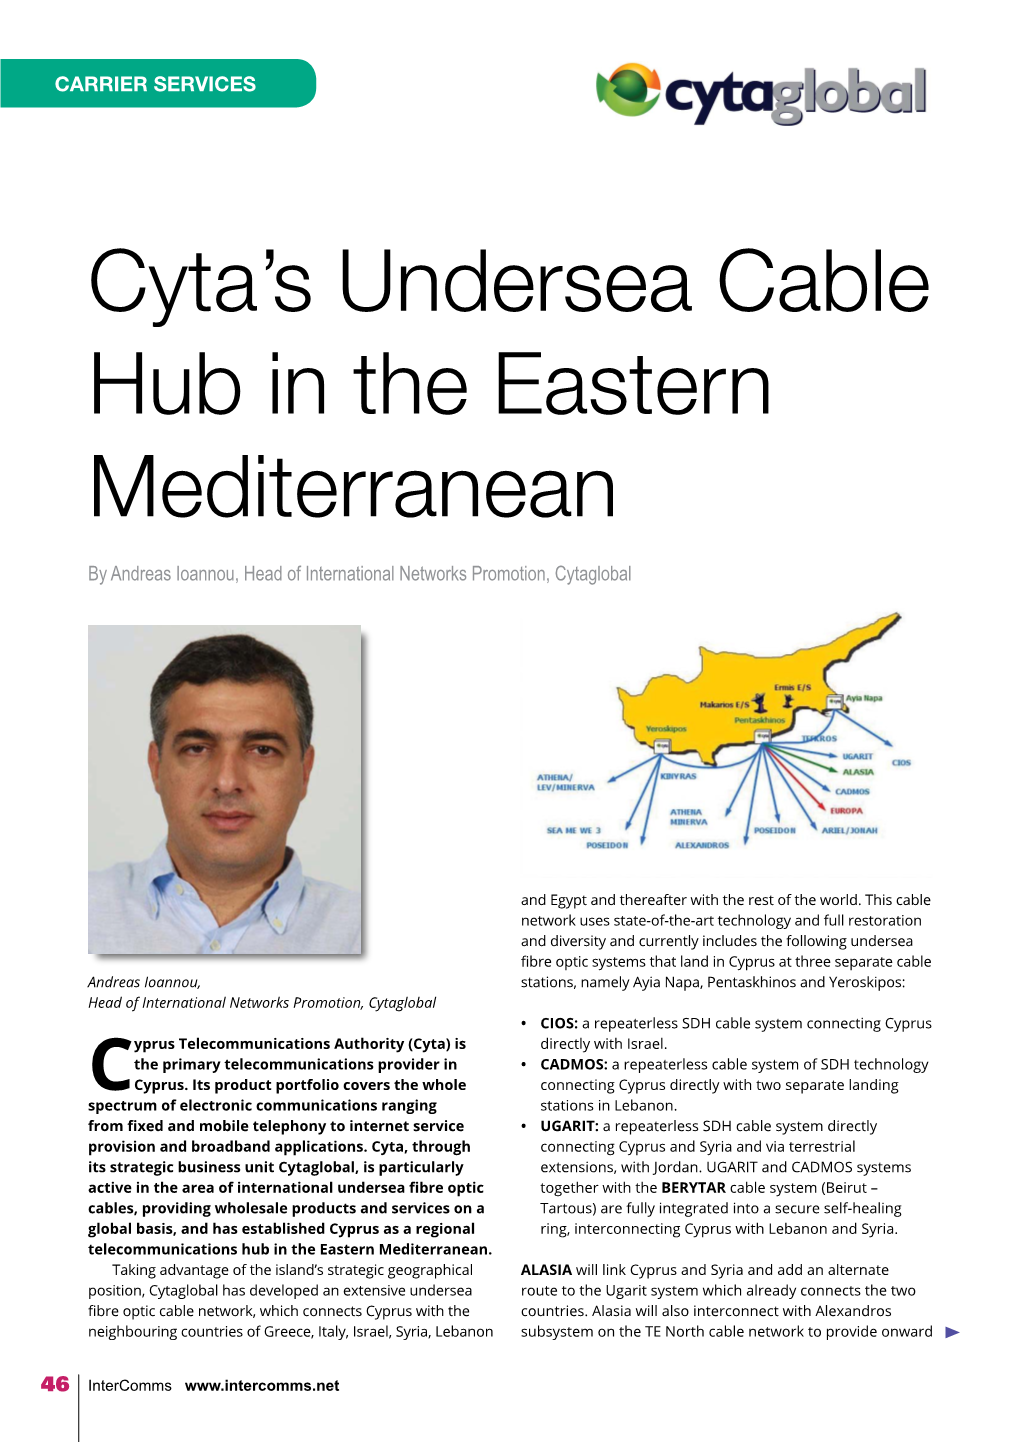 Cyta's Undersea Cable Hub in the Eastern Mediterranean